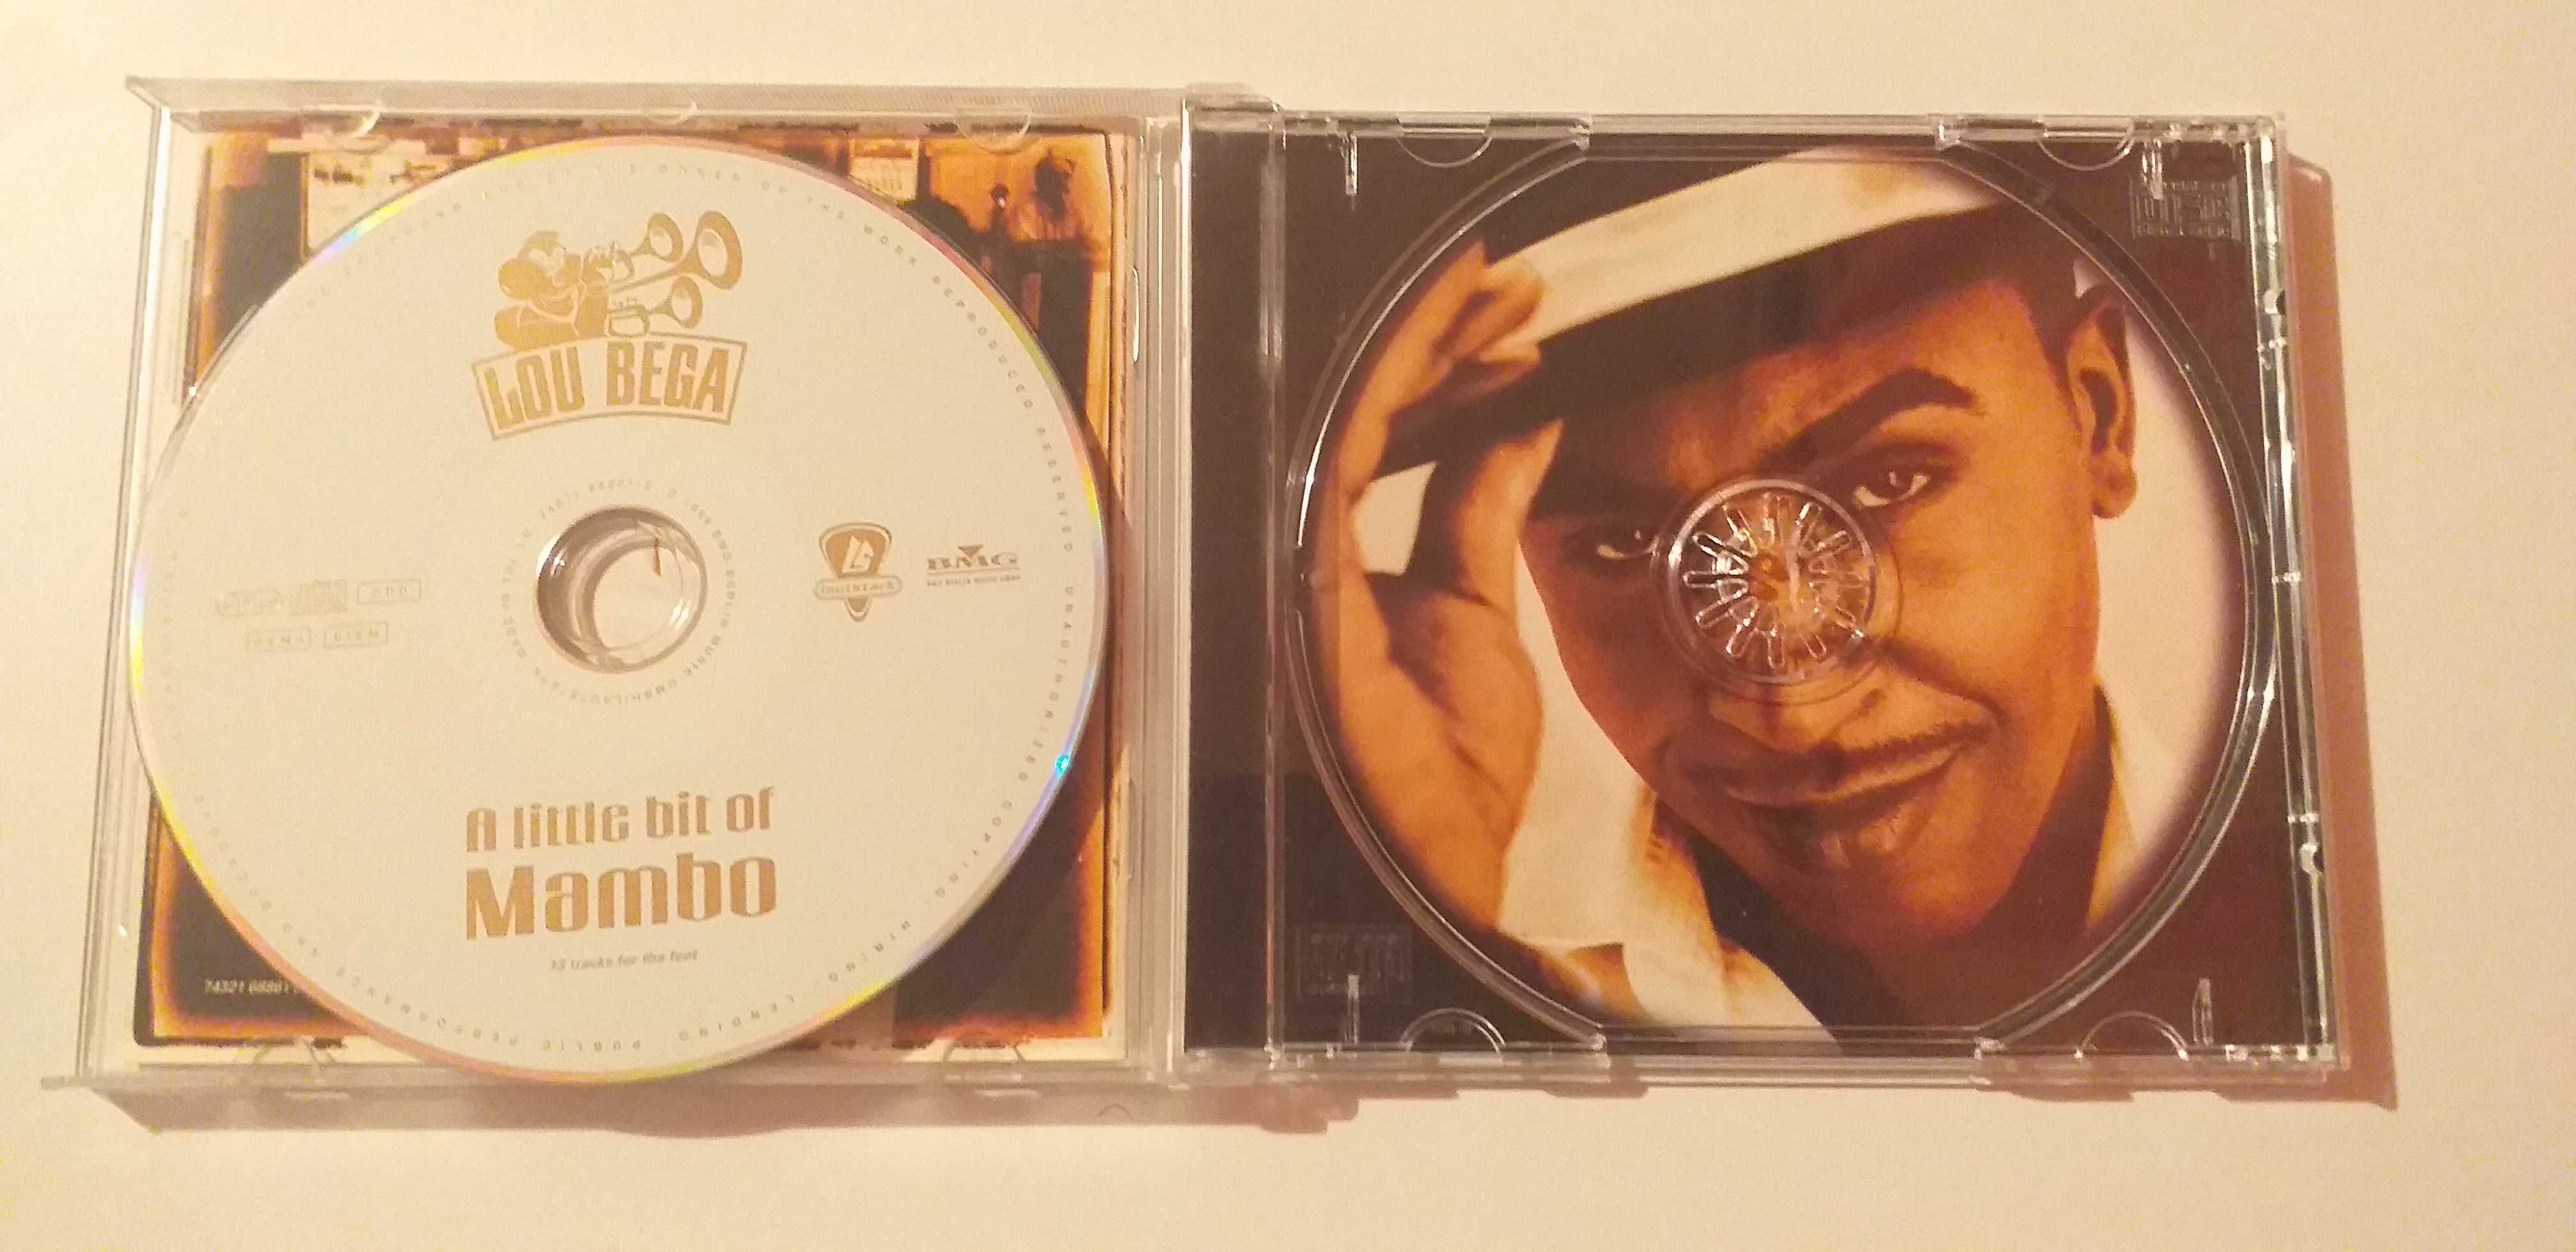 Lou Bega - " A little bit of Mambo " - CD - portes incluidos